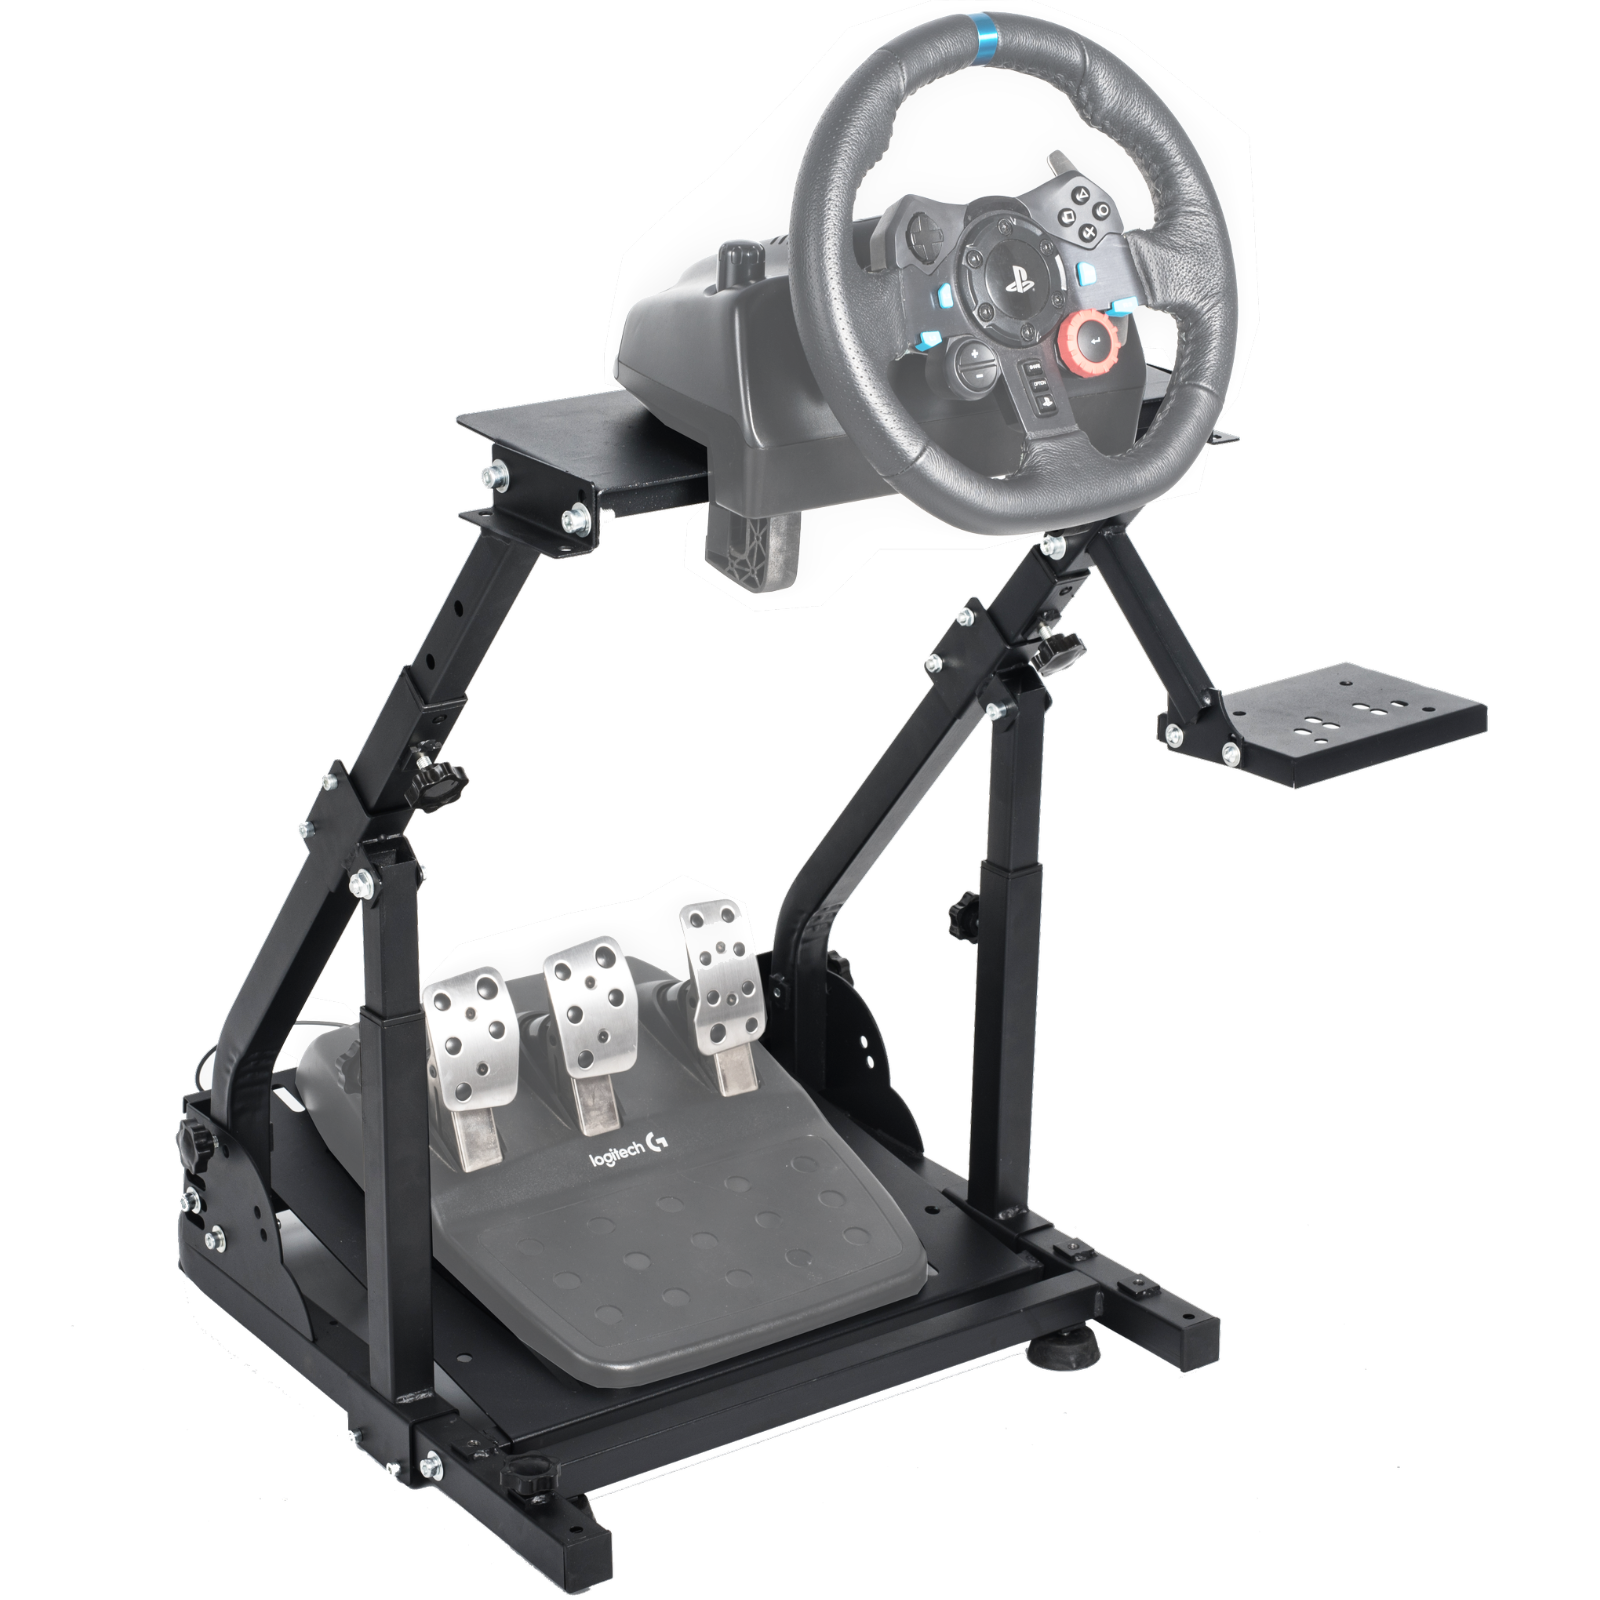 Minneer™ G923 Racing Steering Wheel Stand Pro for Logitech G25